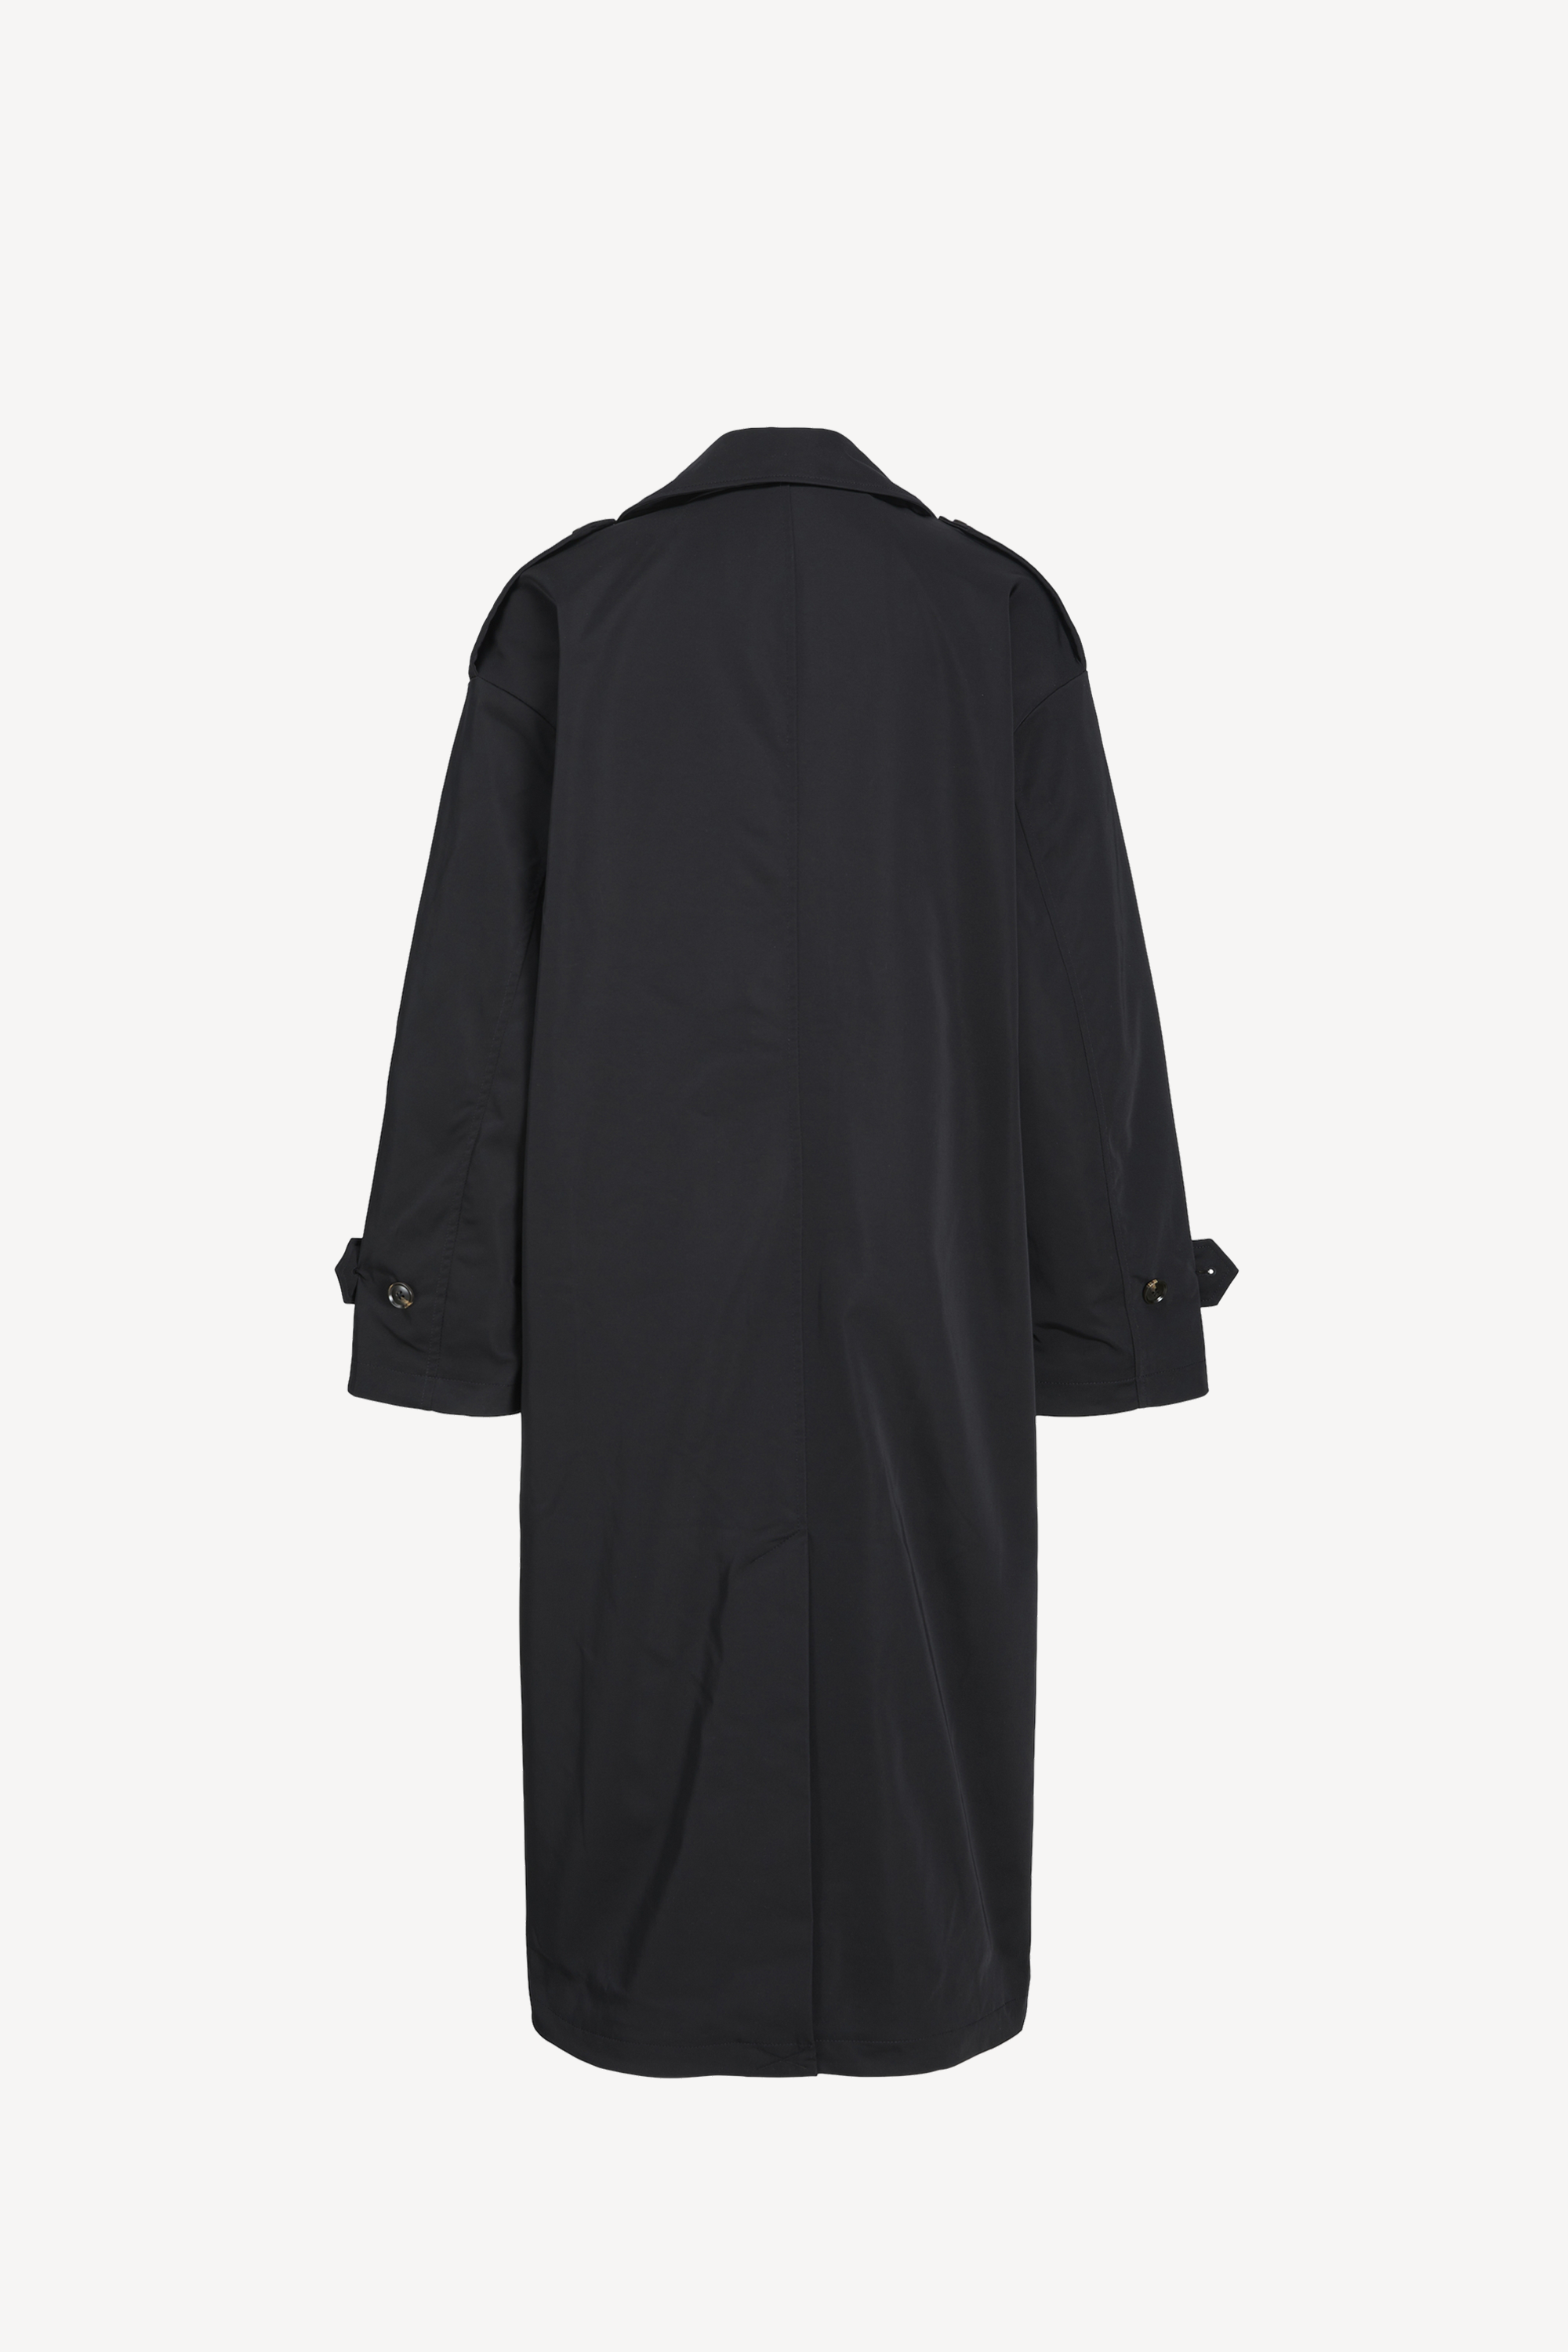 Verona Coat Black